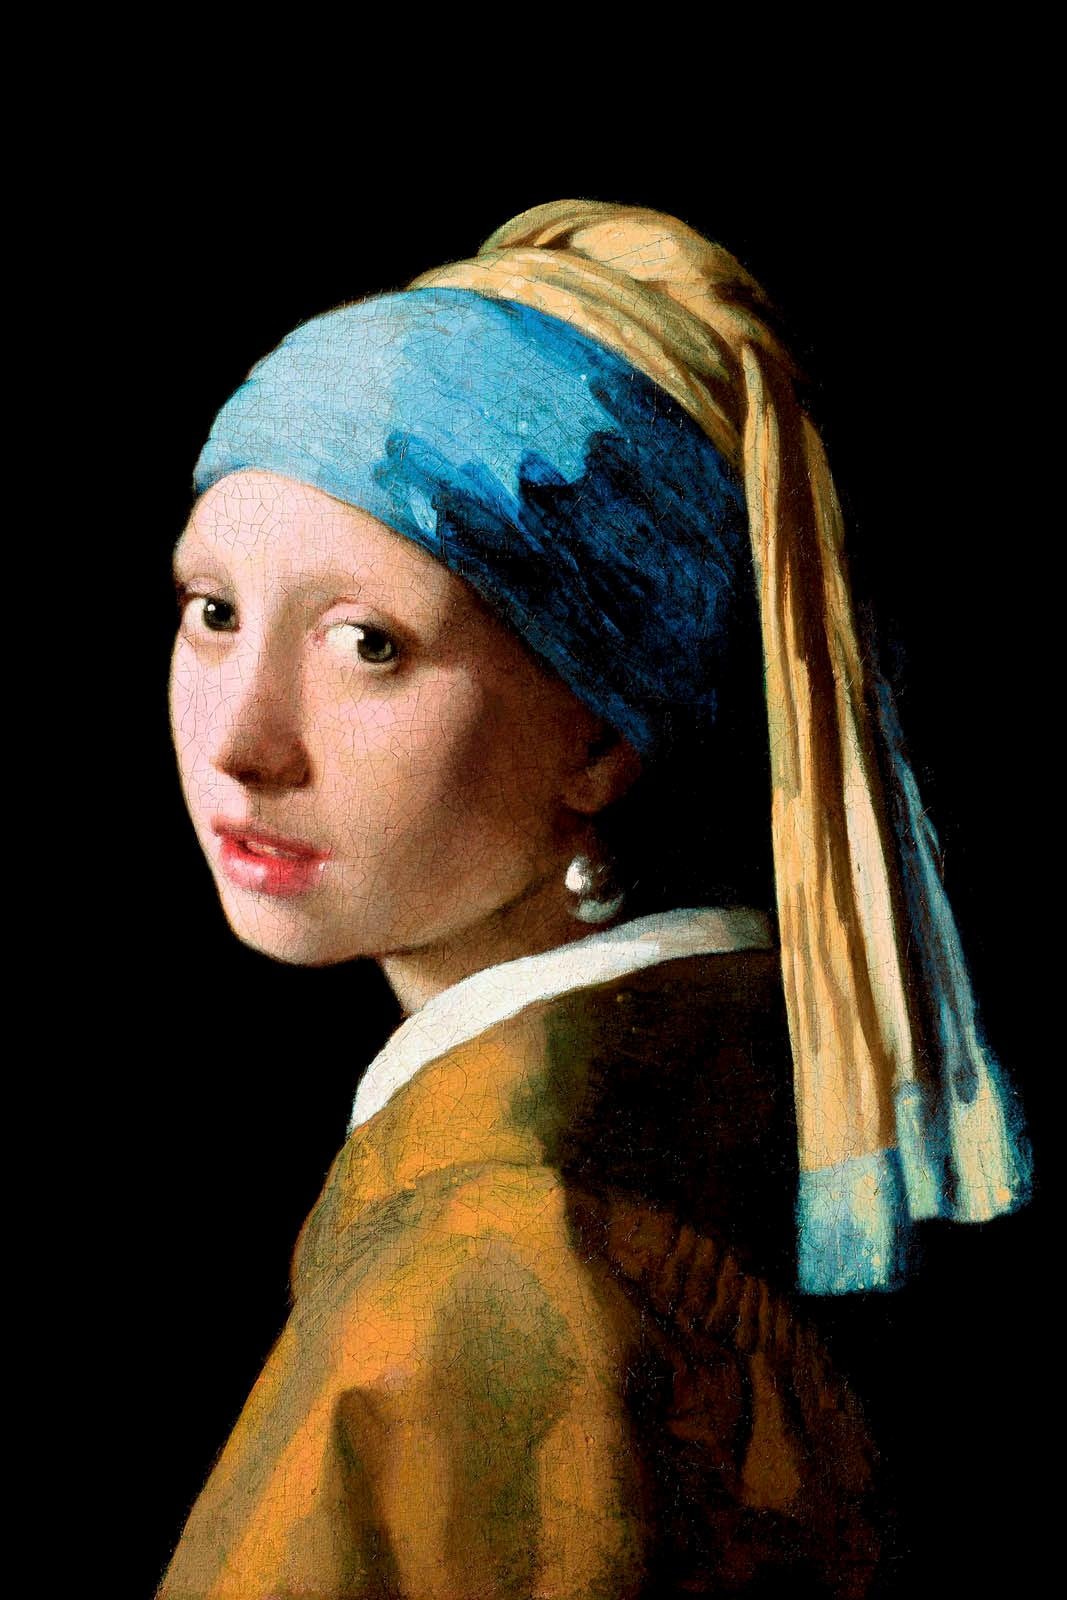 Deco-Panel »J.Vermeer-Mädchen mit Ohrgehänge«, 60/90 cm